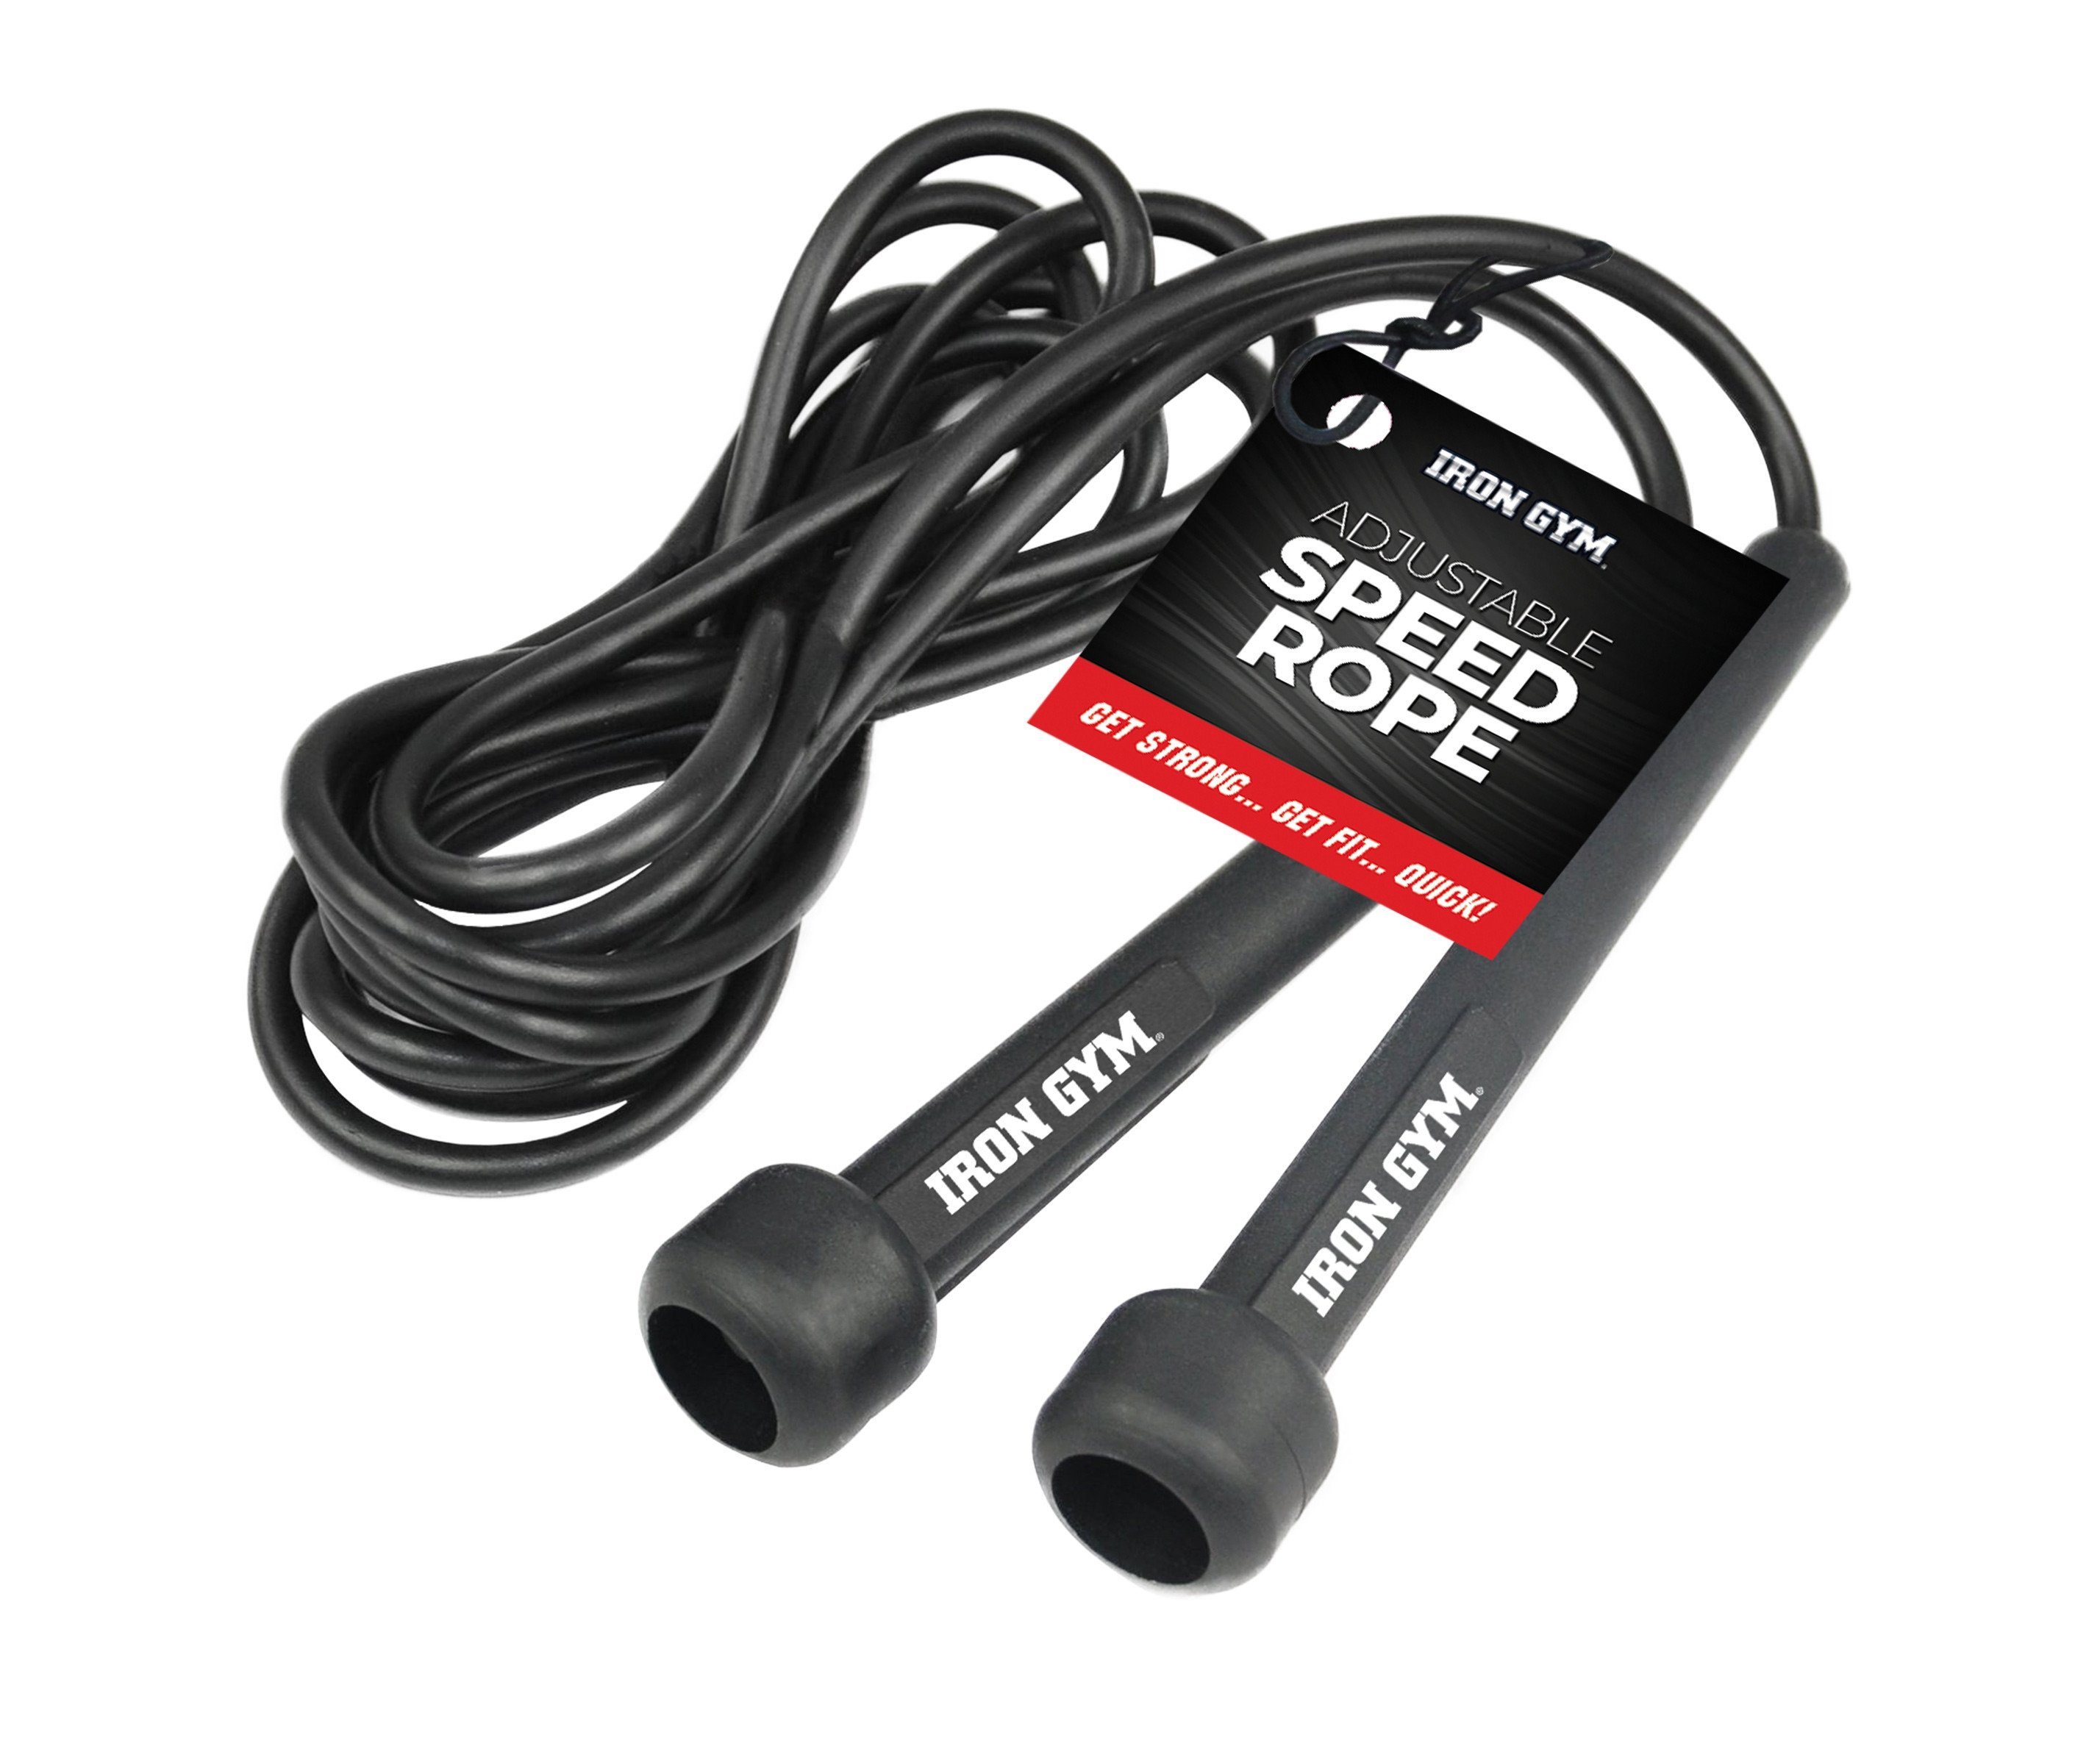 JOKA international Springseil Gym Speed Iron Rope Adjustable